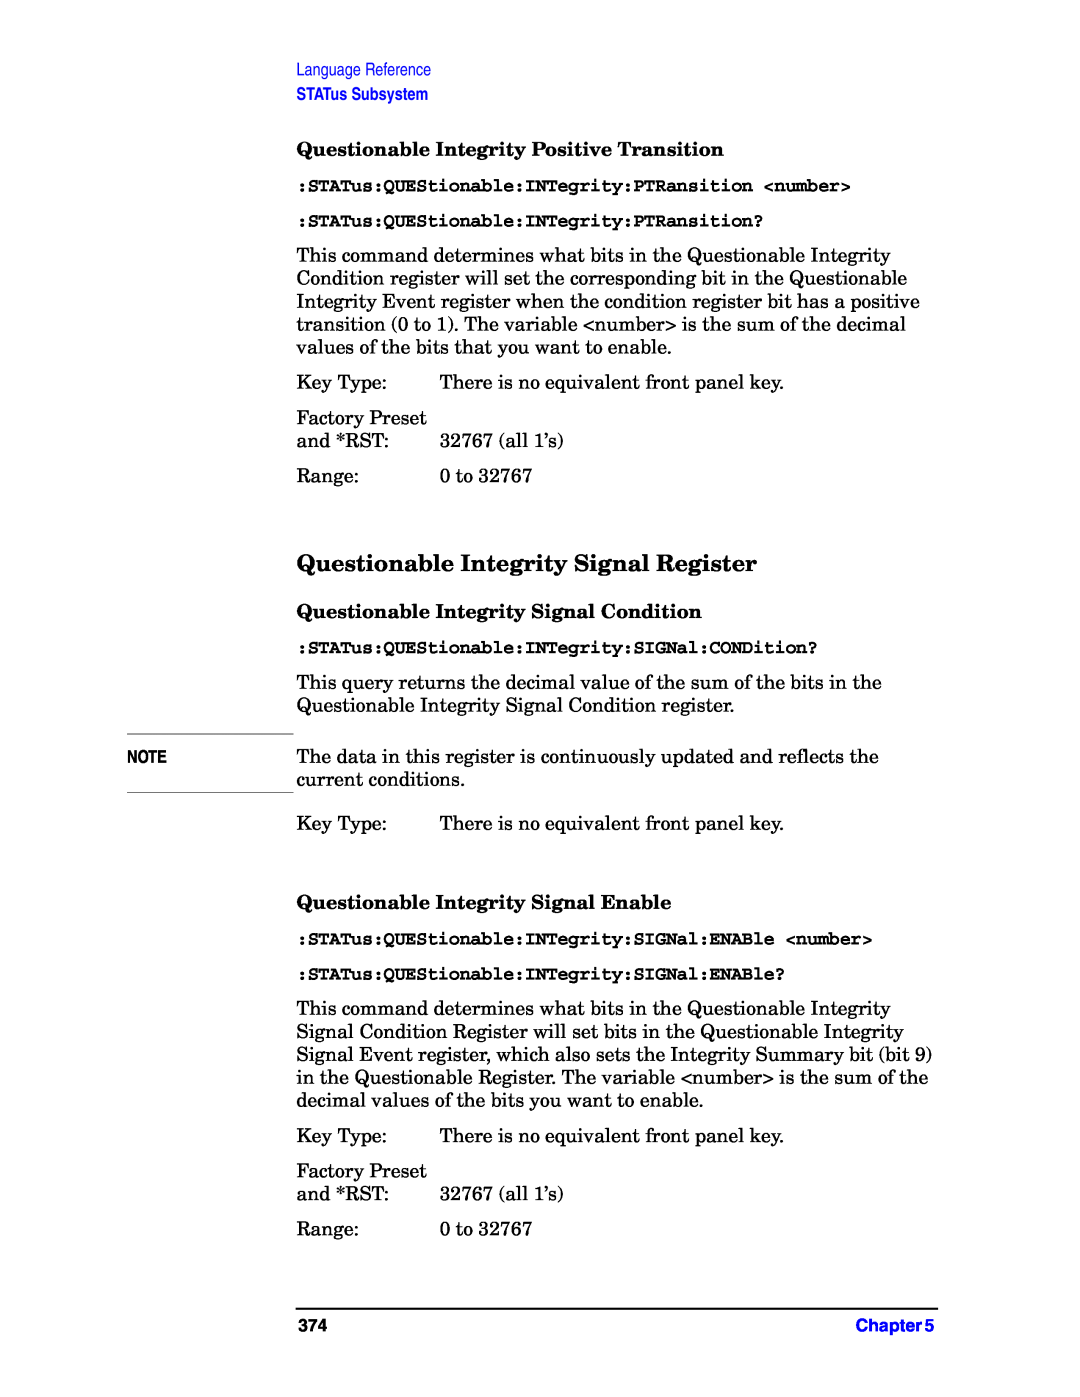 Agilent Technologies E4406A VSA manual Questionable Integrity Signal Register, Questionable Integrity Positive Transition 